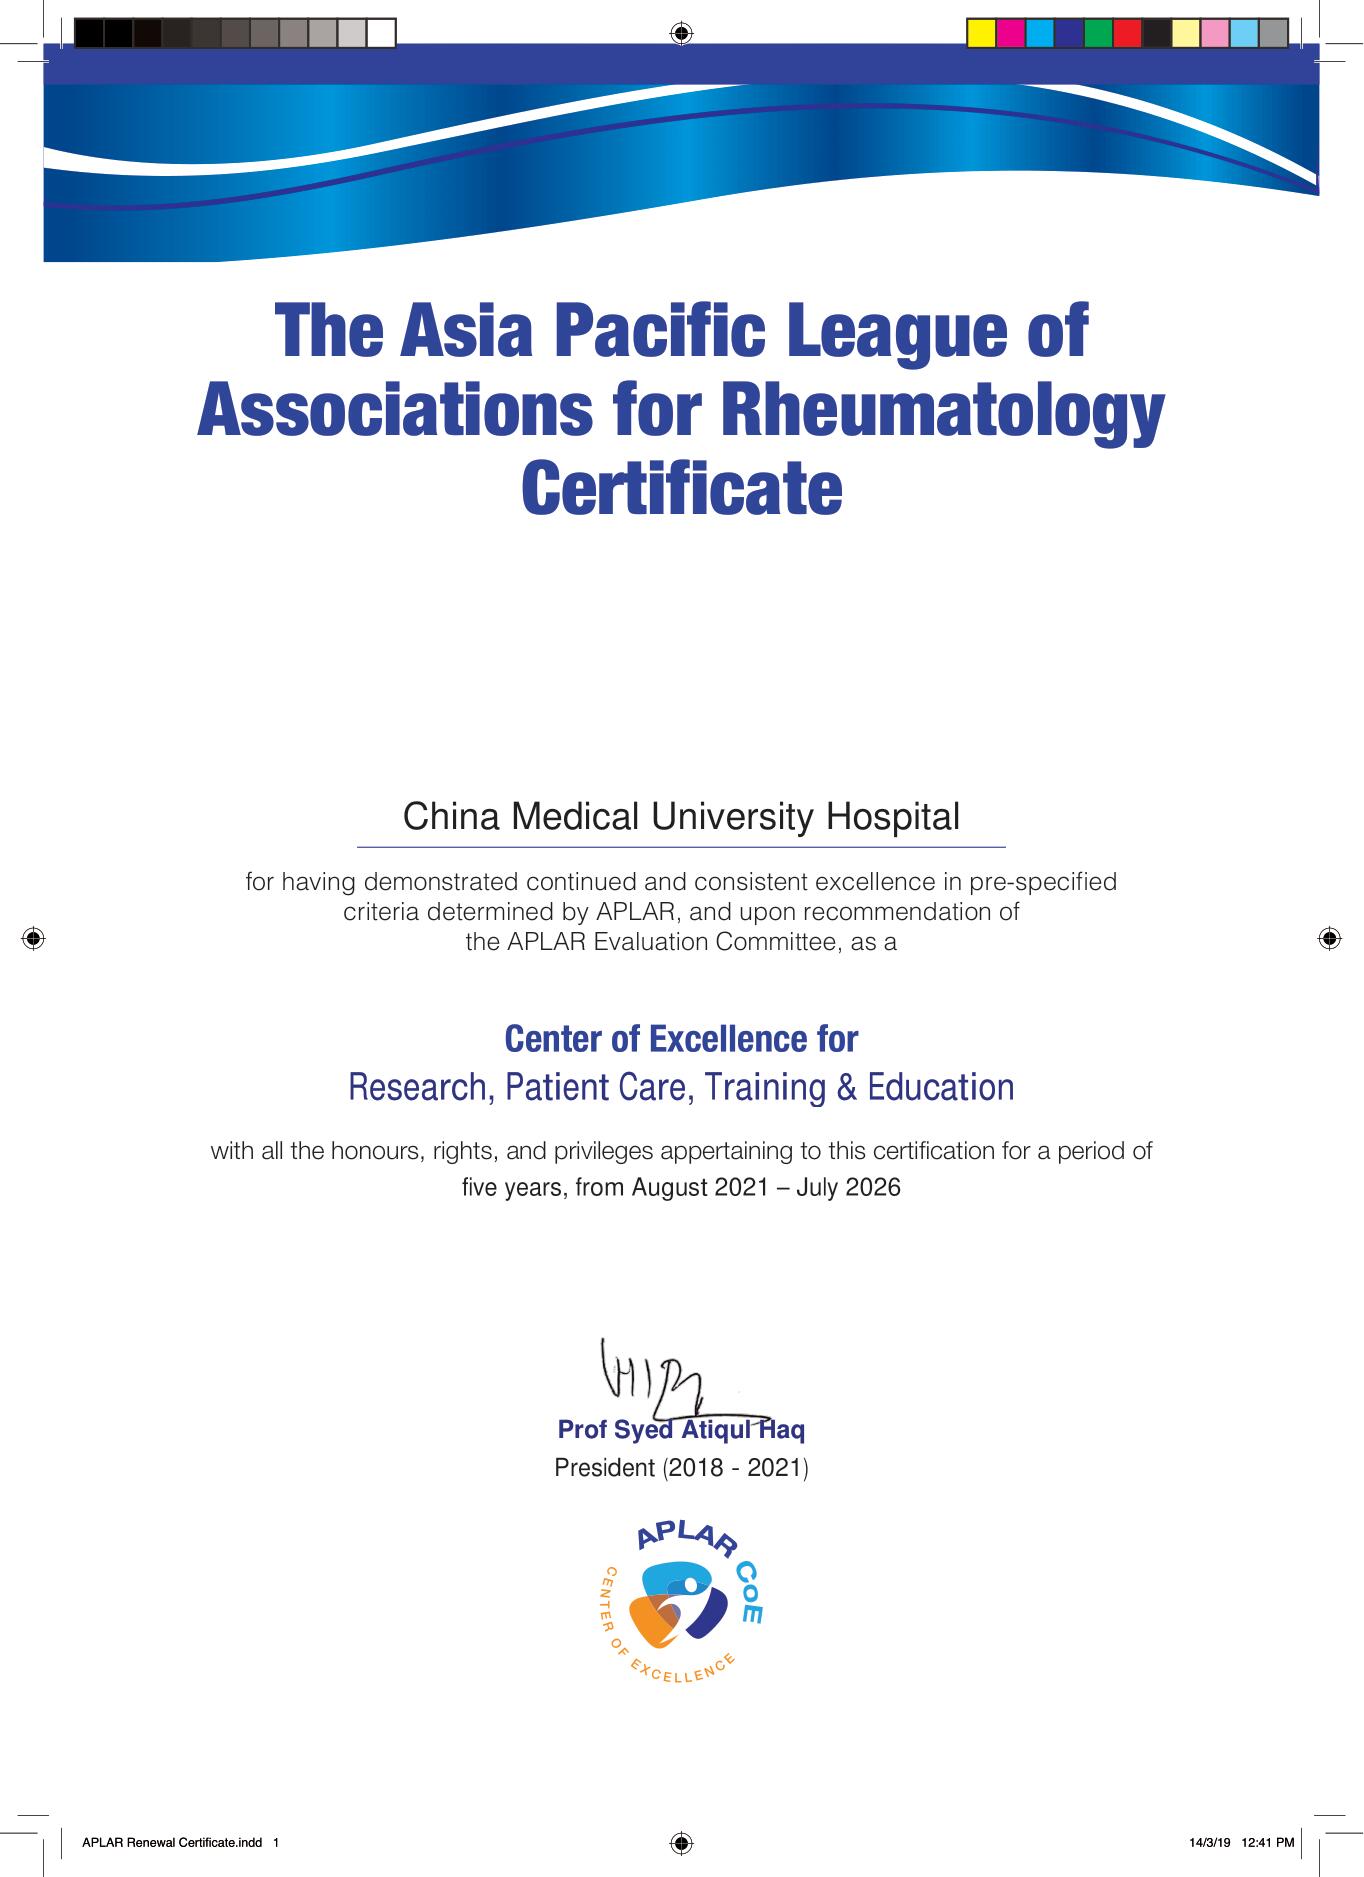 APLAR Renewal Certificate - China Medical University Hospital